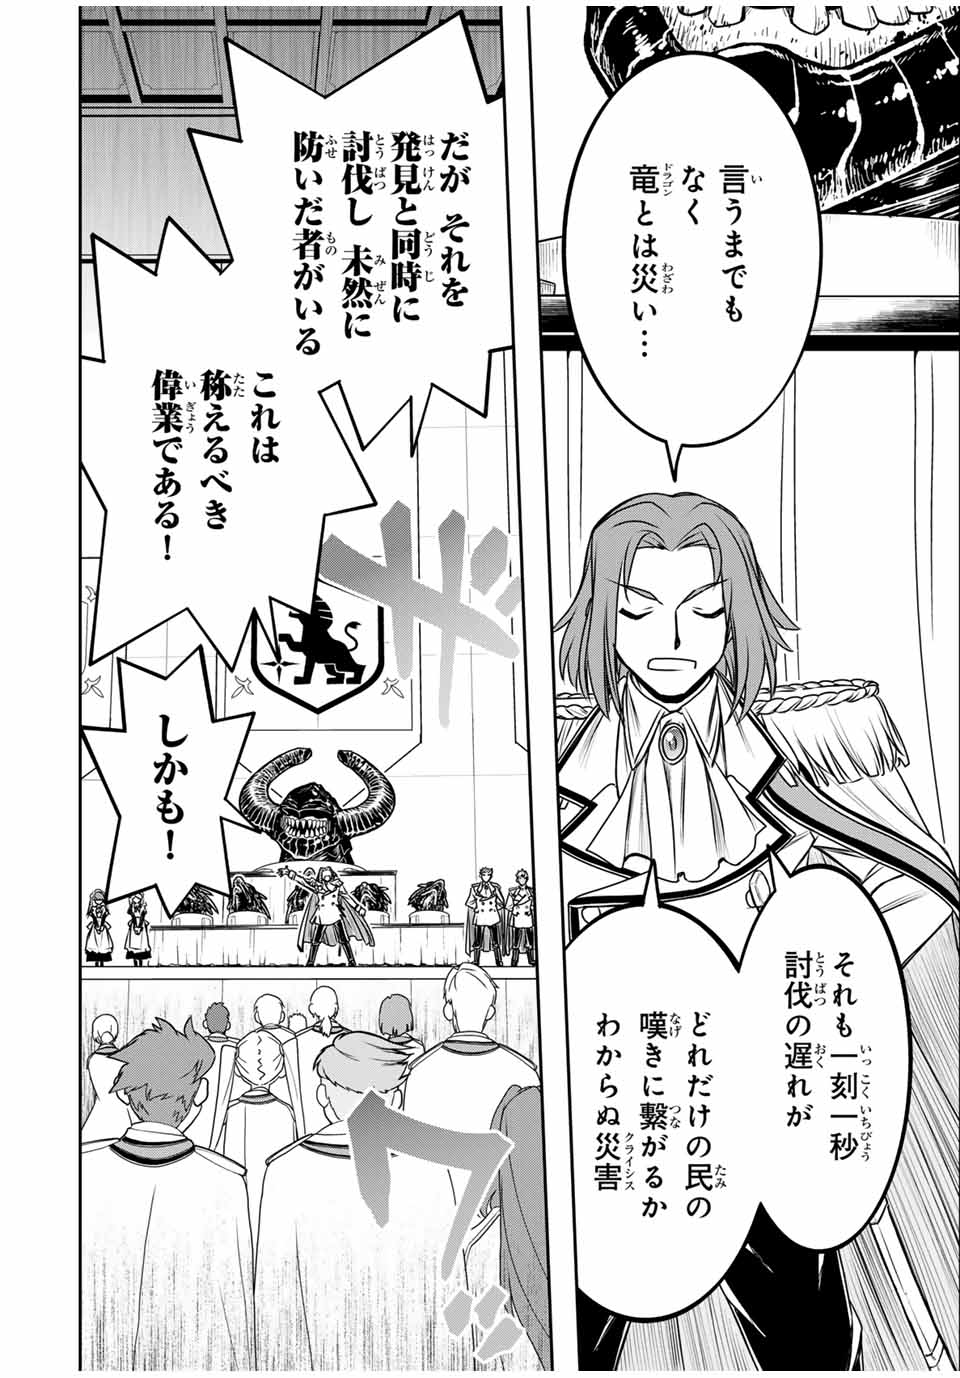 Nengan no Akuyaku Reijou (Last Boss) no Karada wo Teniiretazo!  - Chapter 24 - Page 2